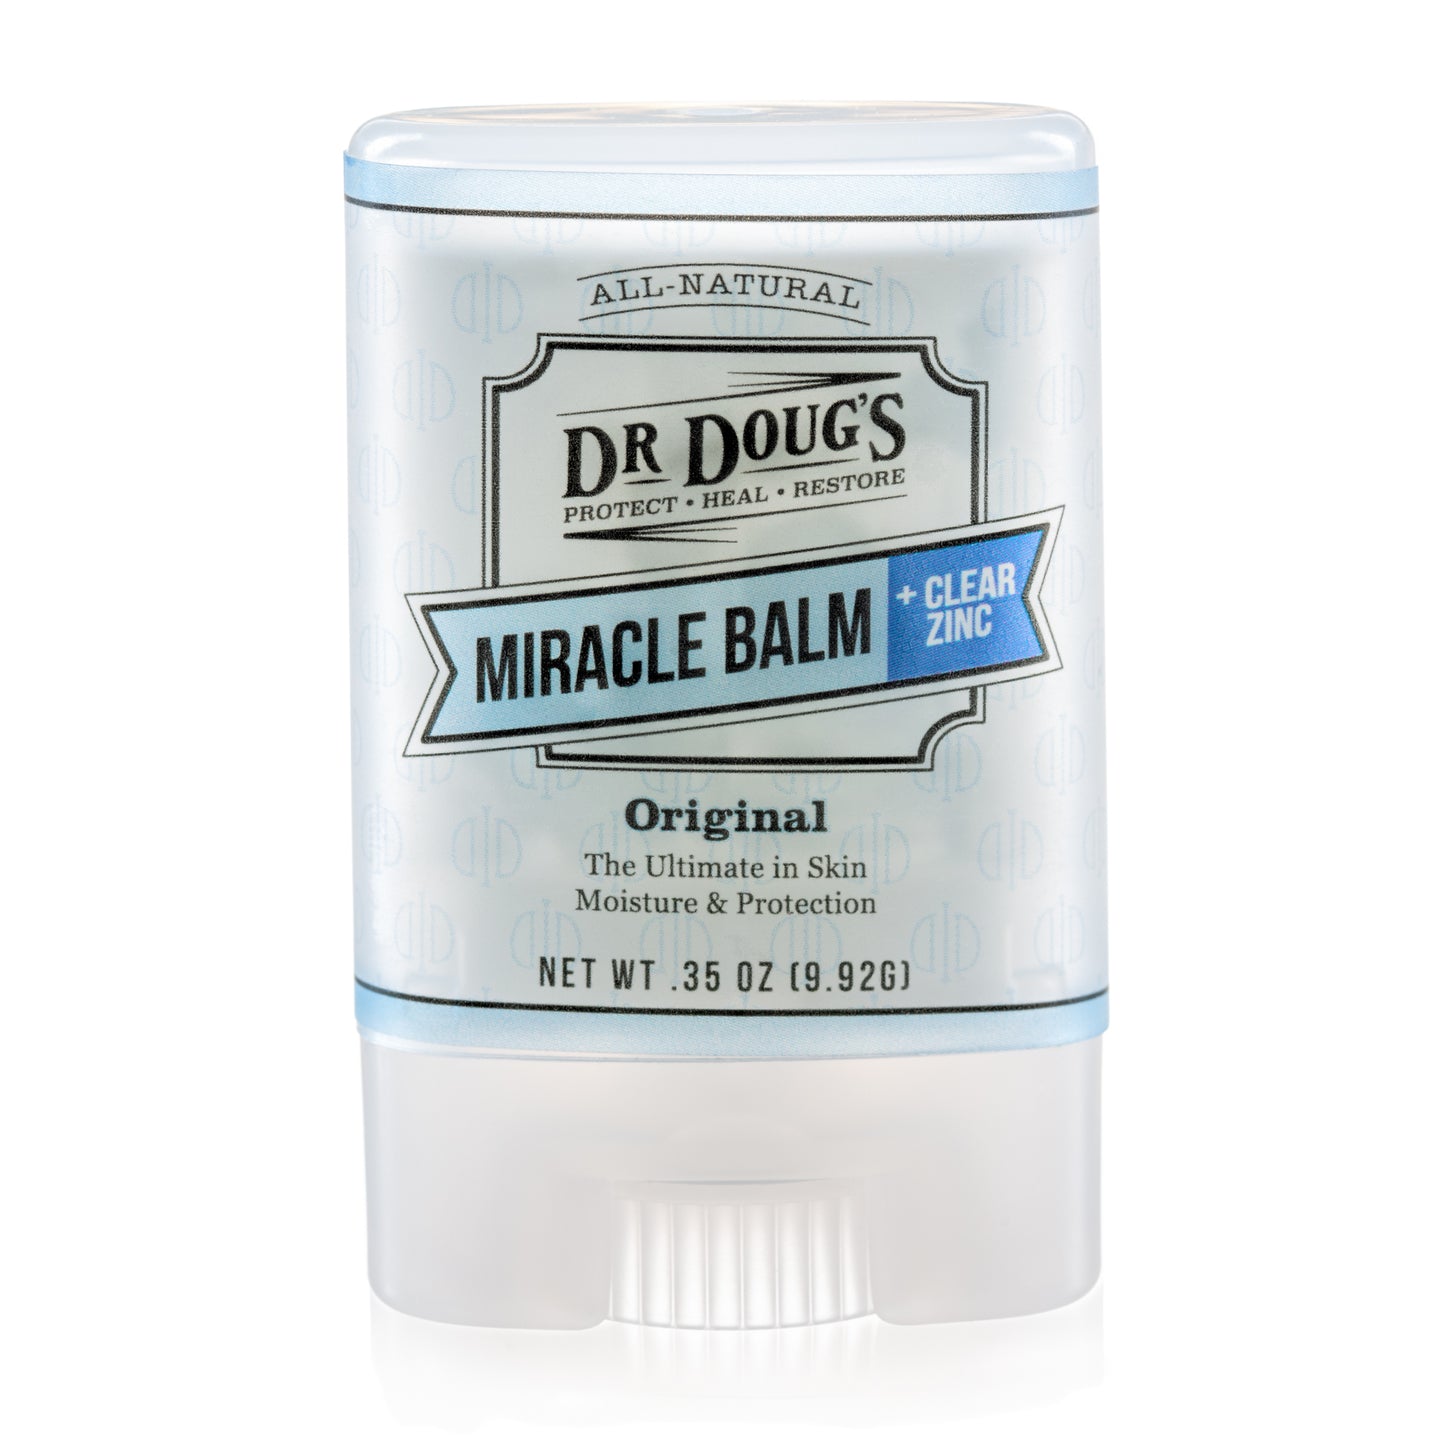 Miracle Balm + Clear Zinc - Dr. Doug's Miracle Balms